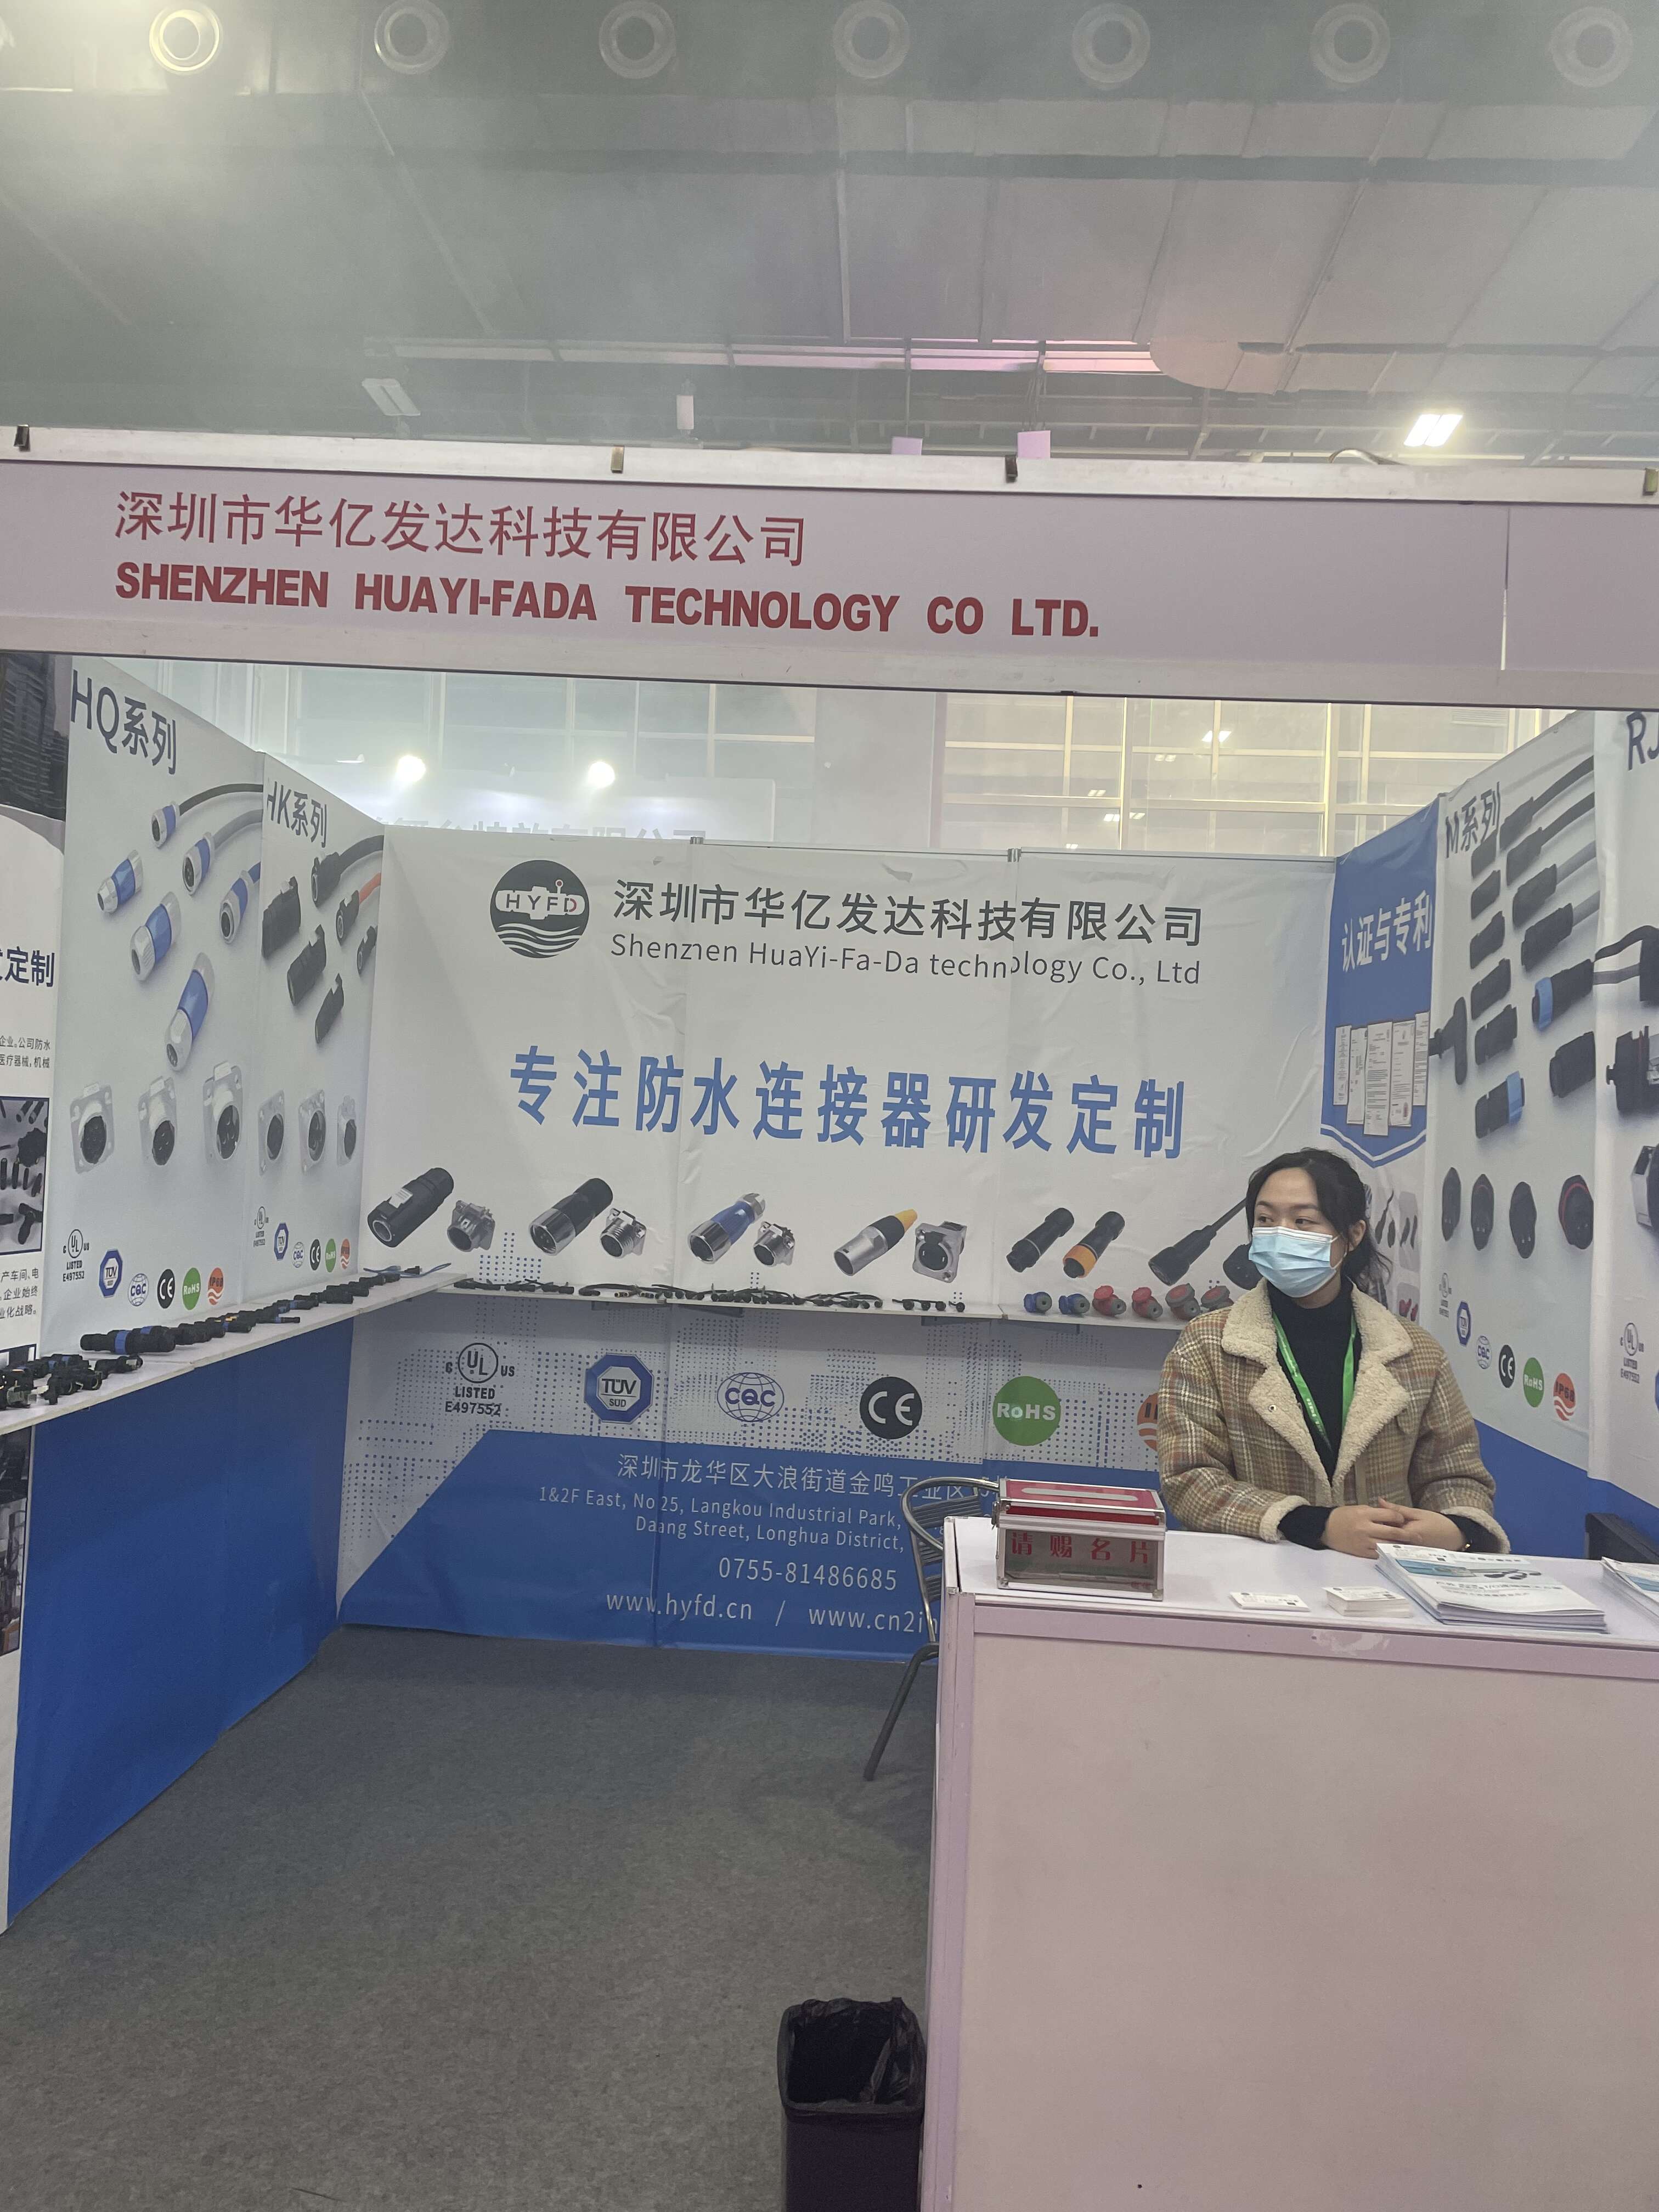 ShenZhen HuaYi-FaDa Technology CO., Ltd. je sodeloval na sejmu razsvetljave